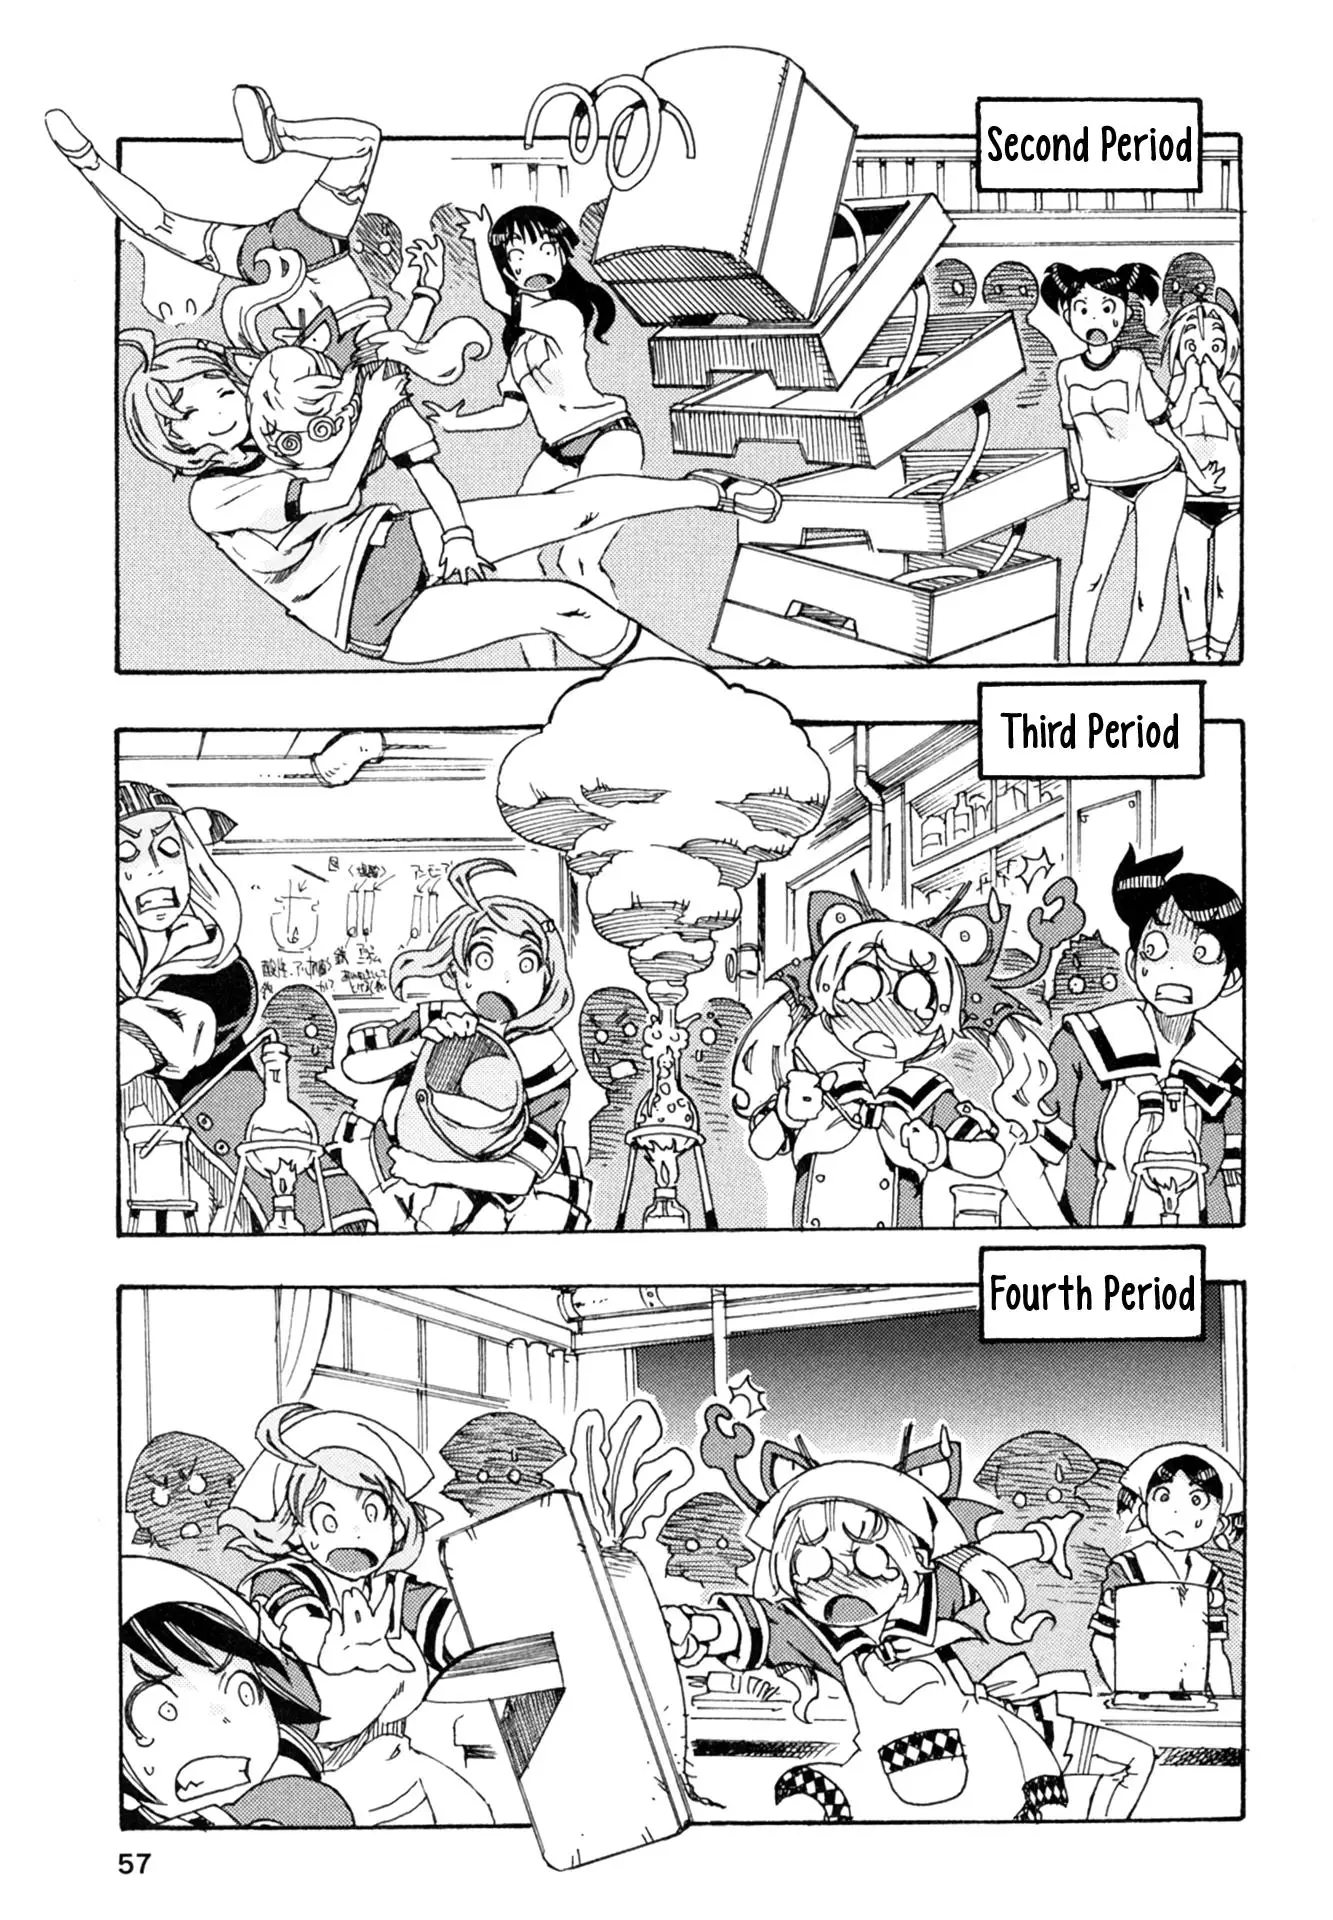 Oichii Tte Yutteyo. - 2 page 13-cacf6351